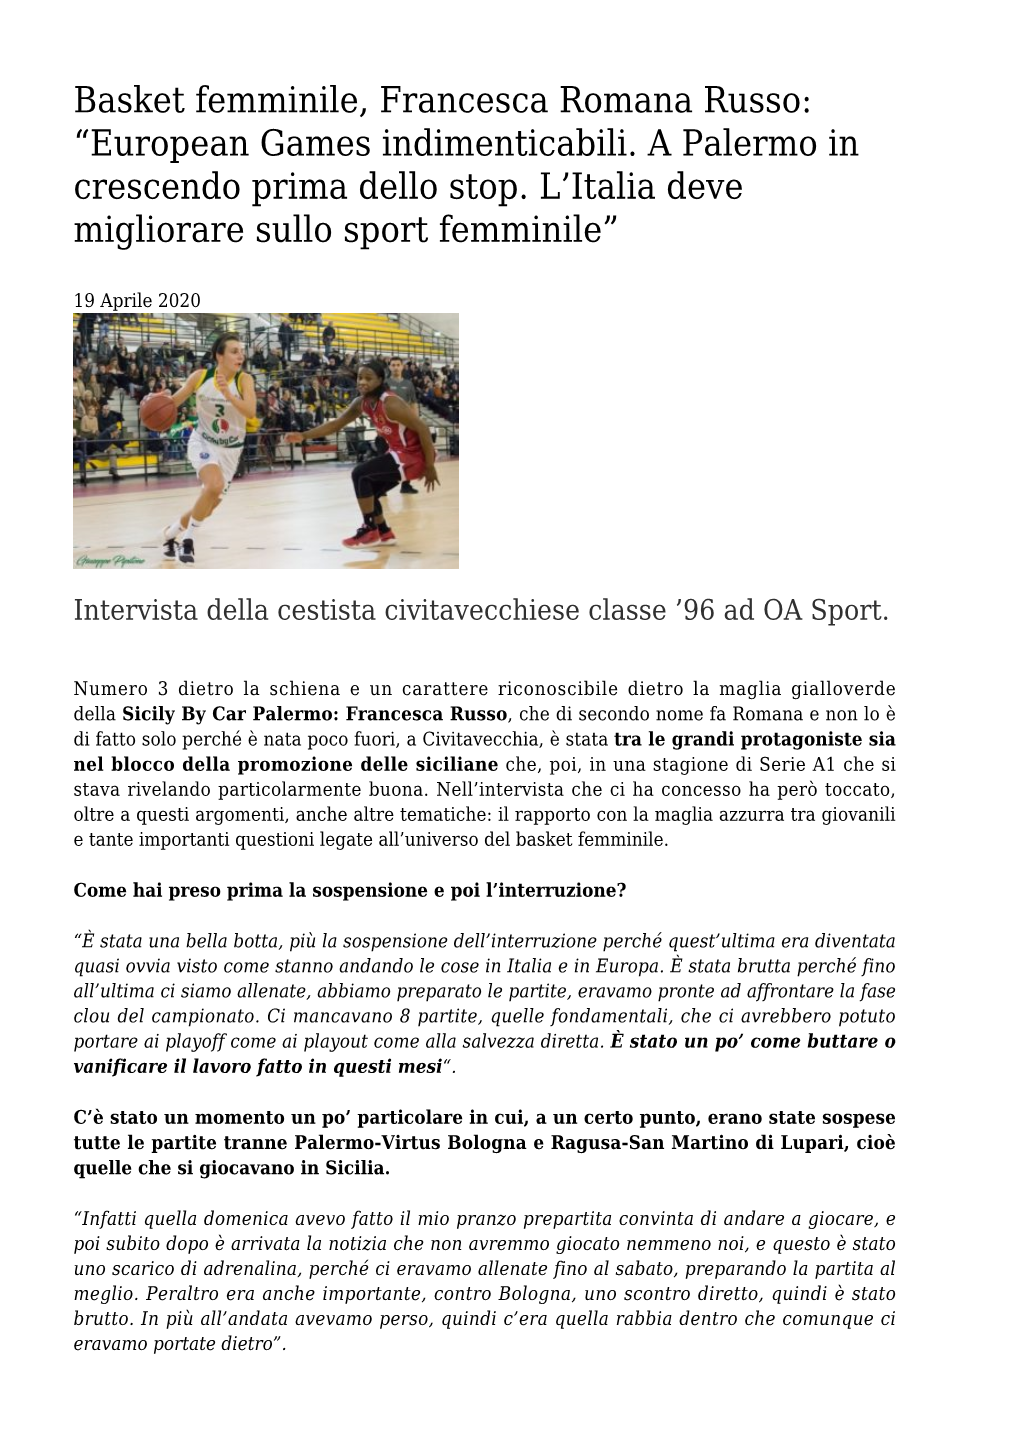 Basket Femminile, Francesca Romana Russo: “European Games Indimenticabili